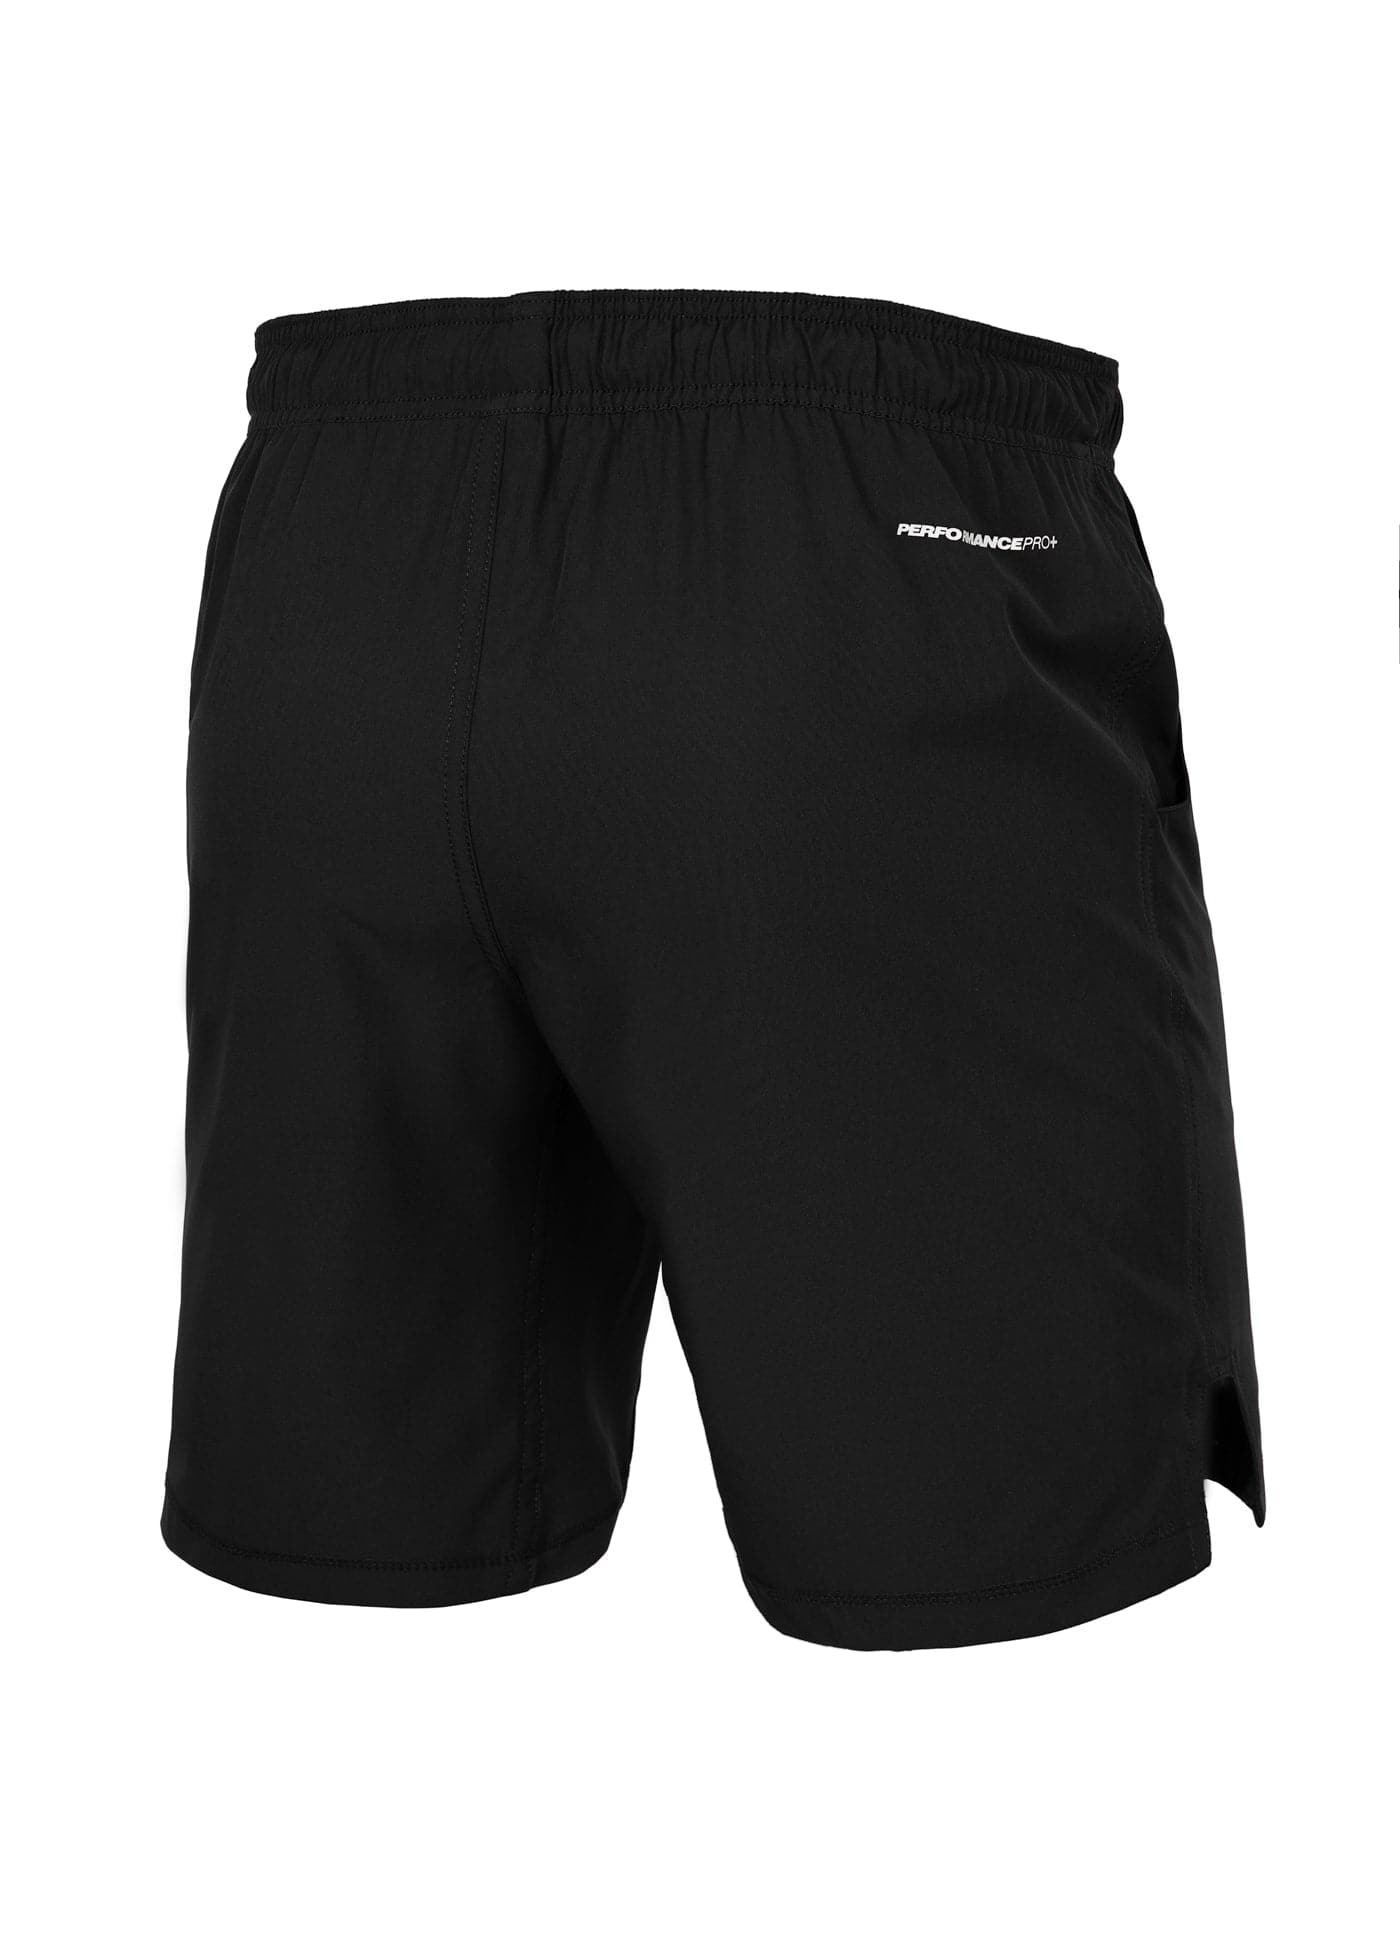 HILLTOP SPORTS 2 Black Grappling Shorts 